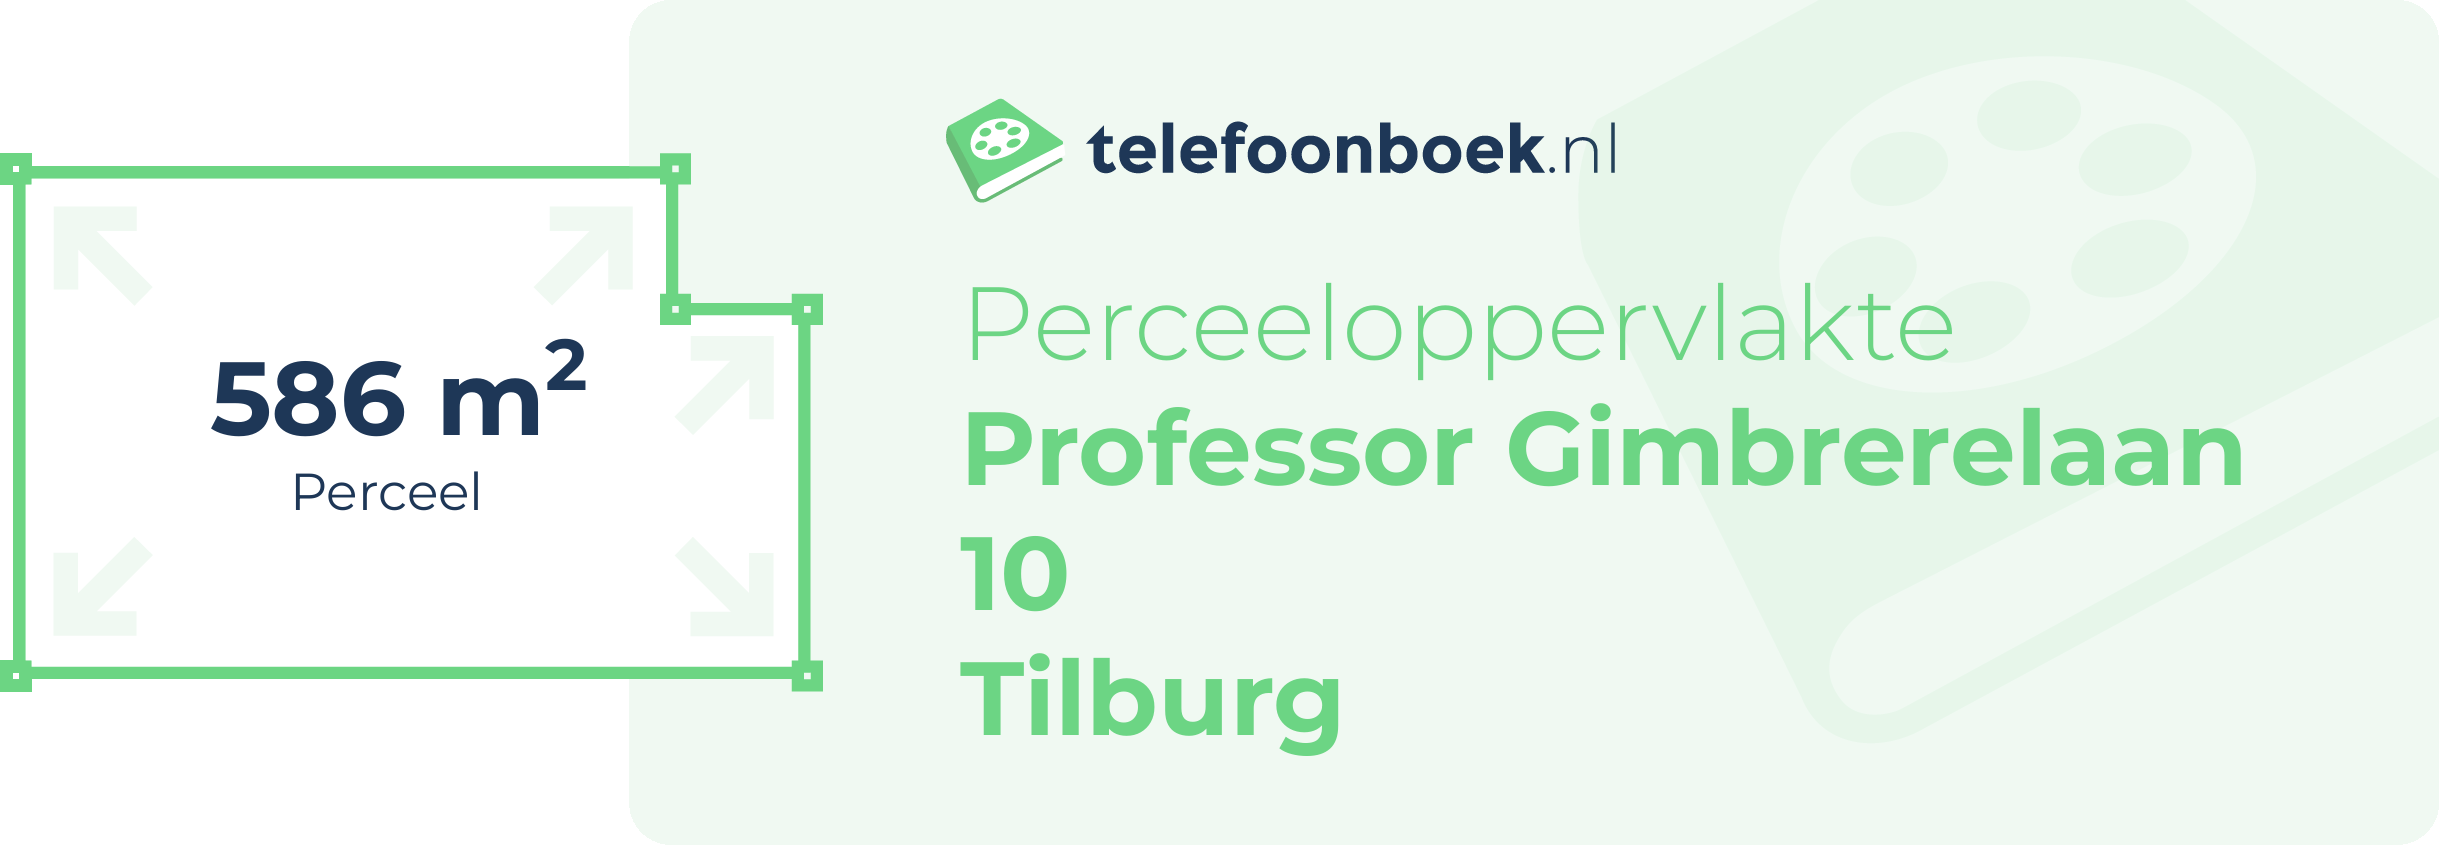 Perceeloppervlakte Professor Gimbrerelaan 10 Tilburg